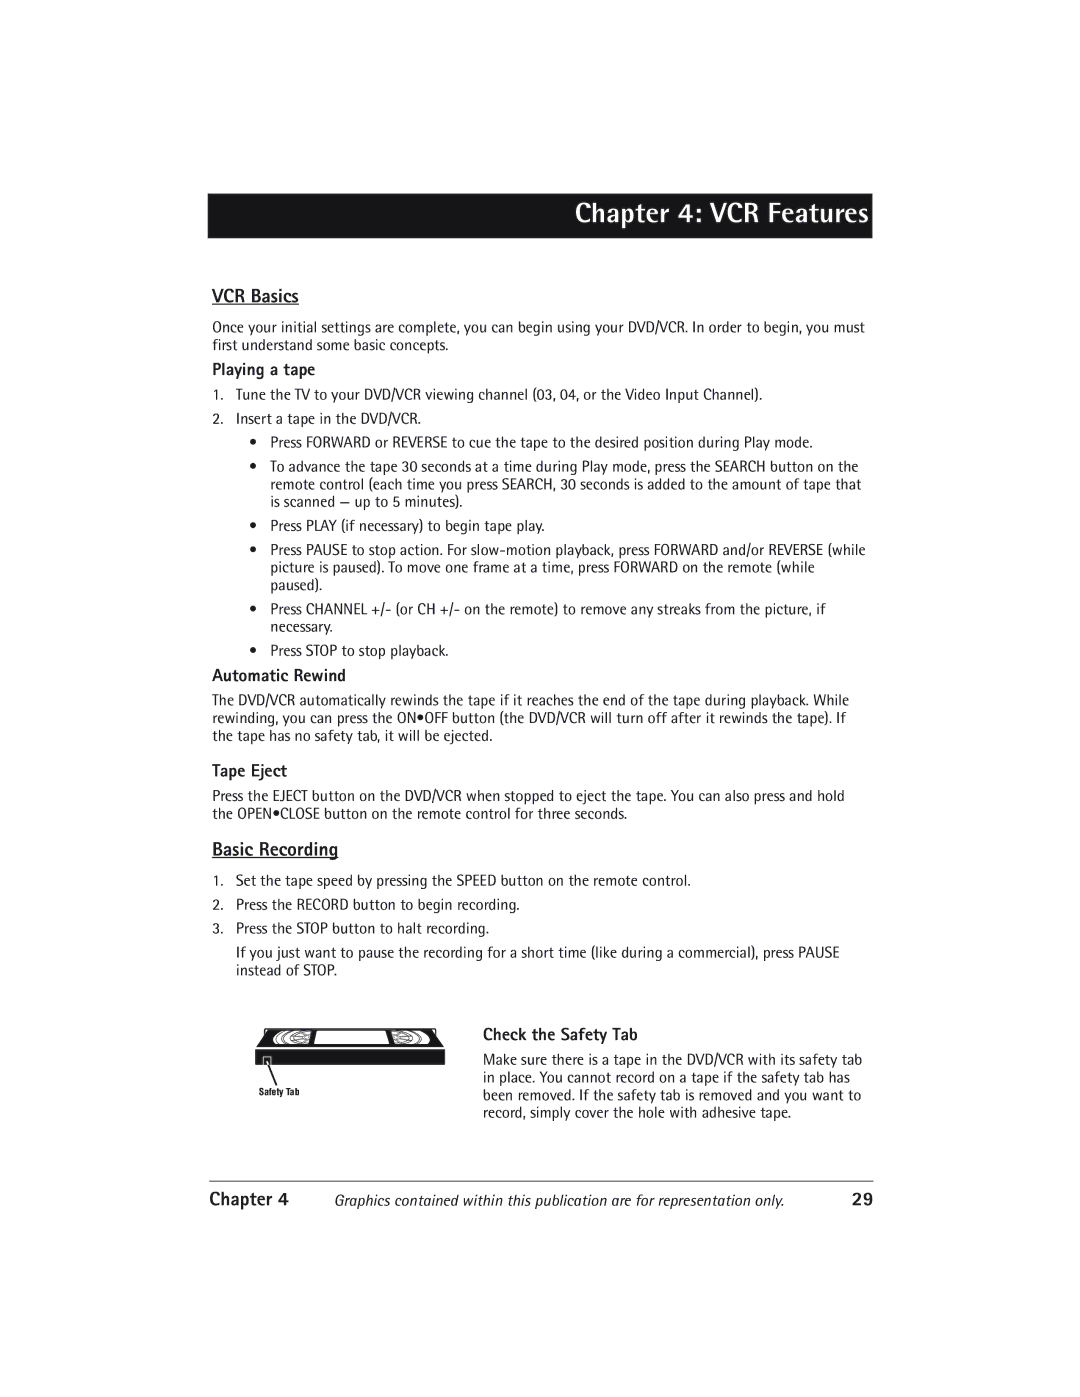 RCA DVD/VCR manual VCR Basics, Basic Recording 